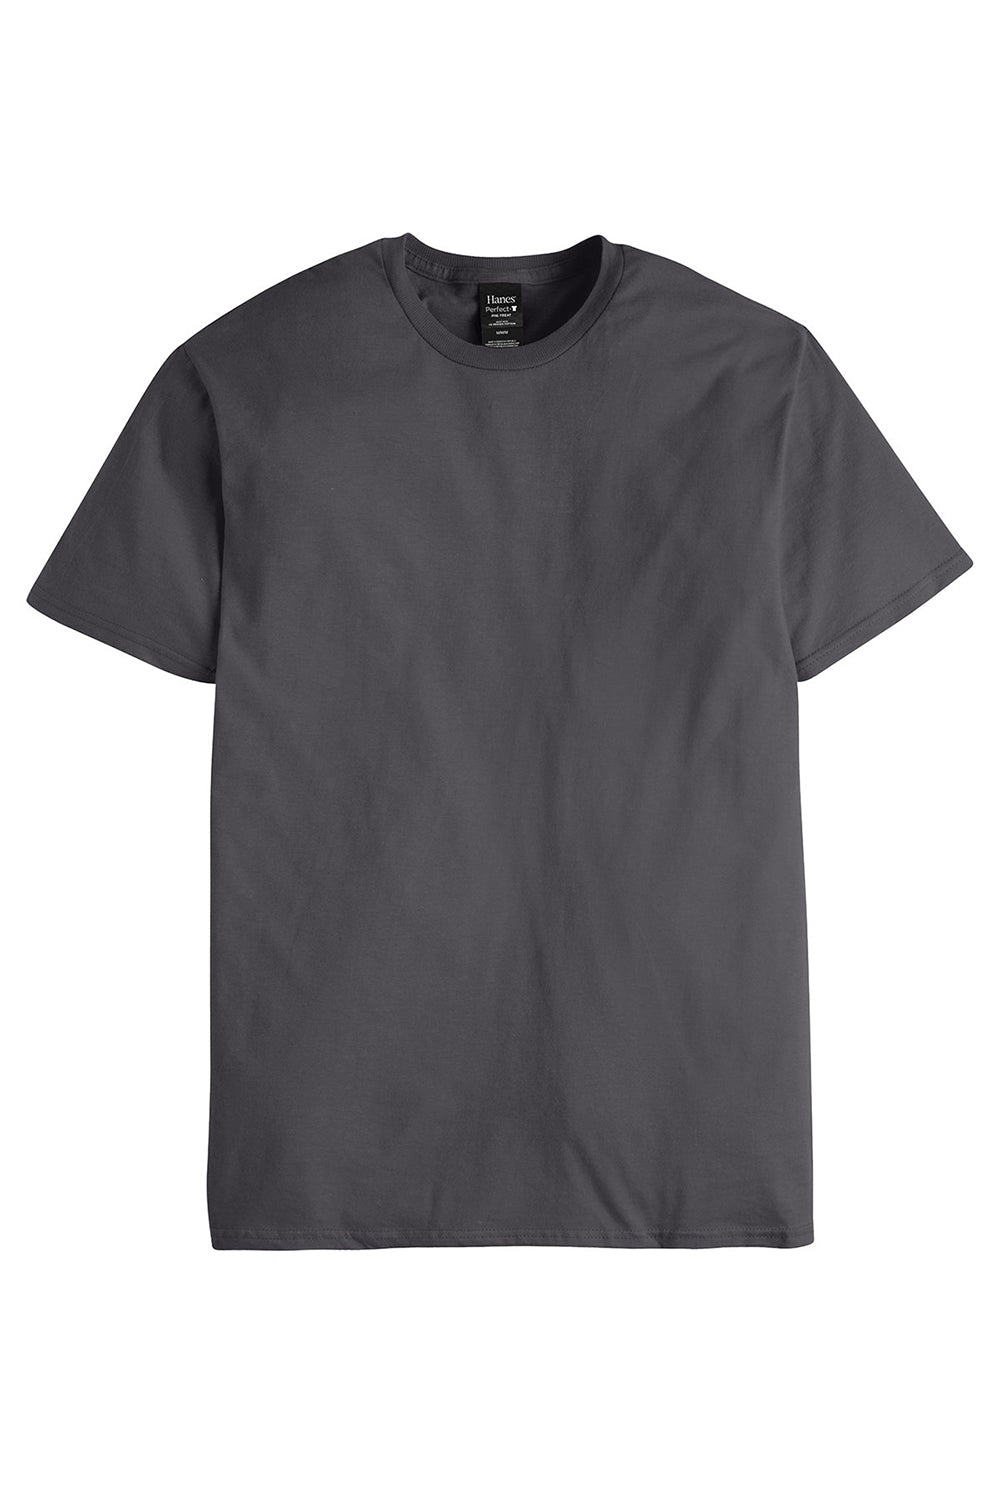 Hanes 498PT Mens Perfect-T PreTreat Short Sleeve Crewneck T-Shirt Smoke Grey Flat Front